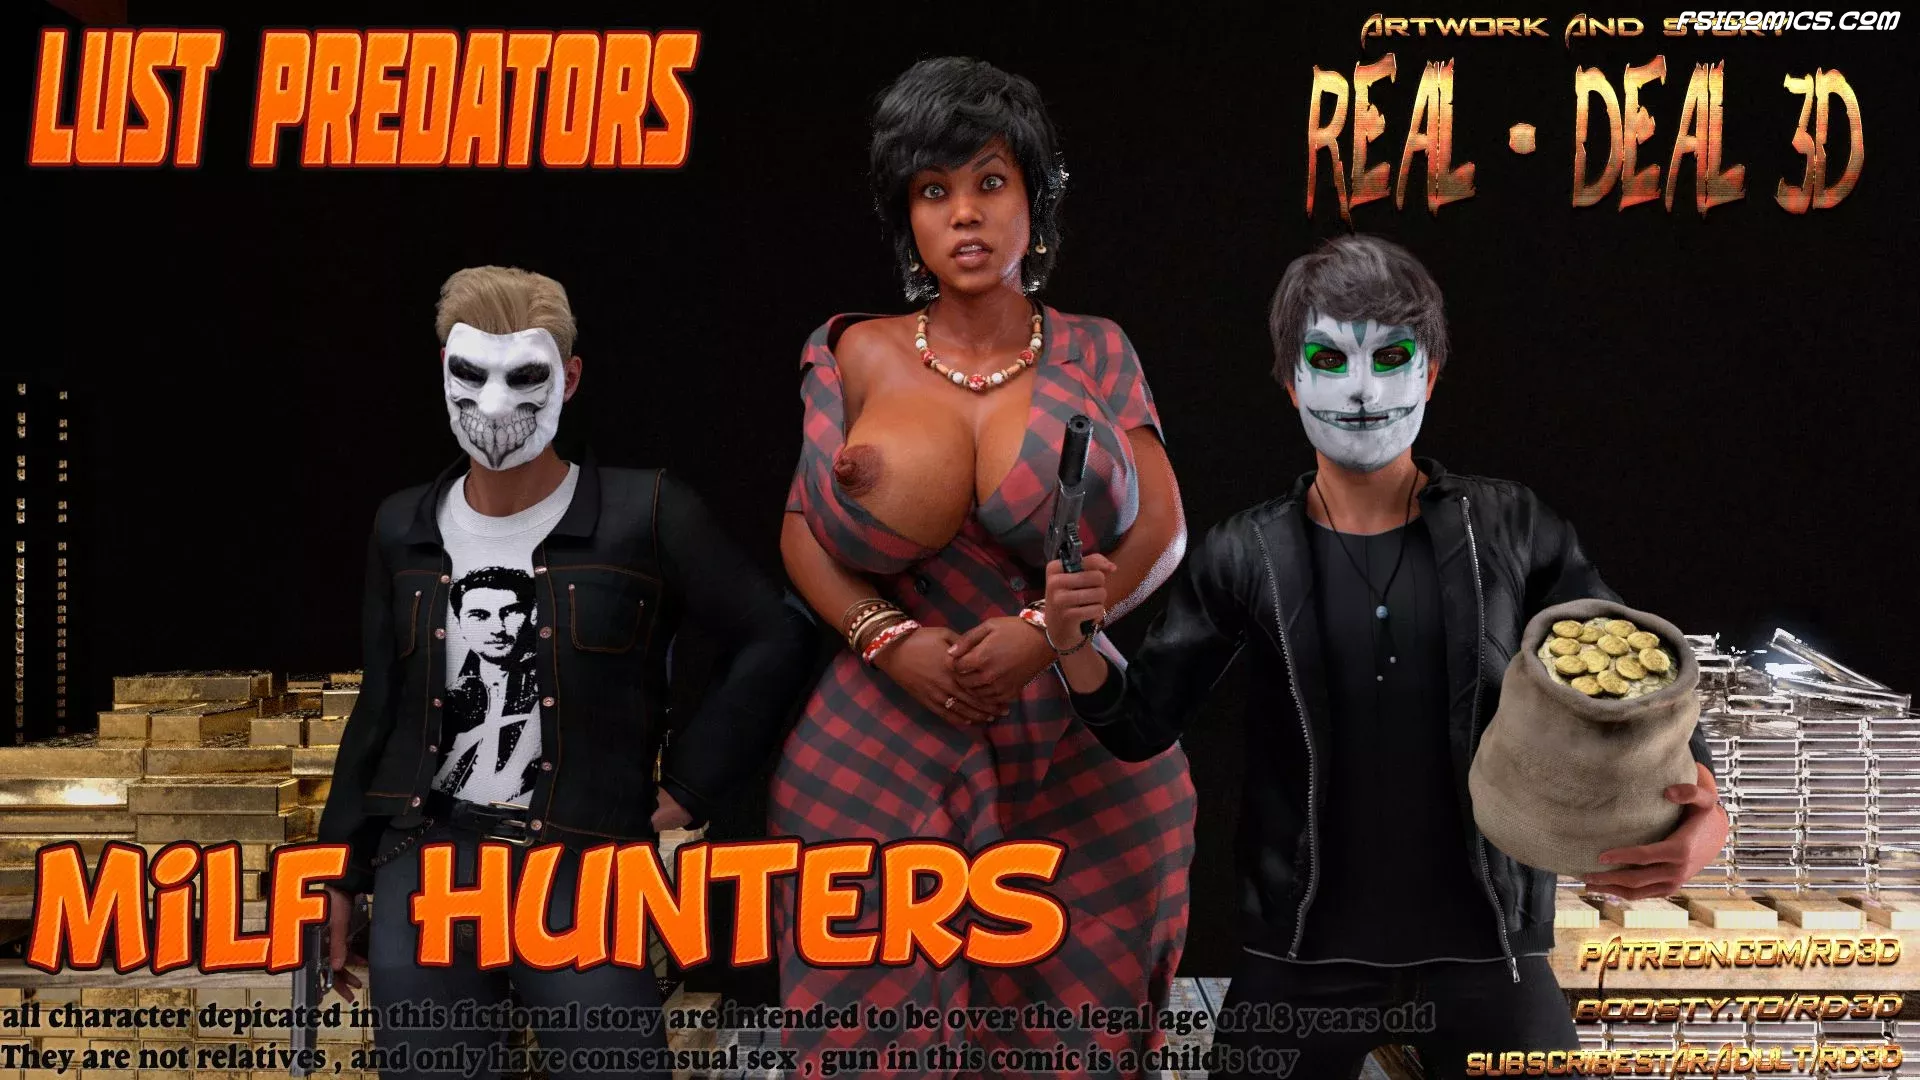 MILF Hunters Chapter 1 - Real Deal 3D - 15 - FSIComics